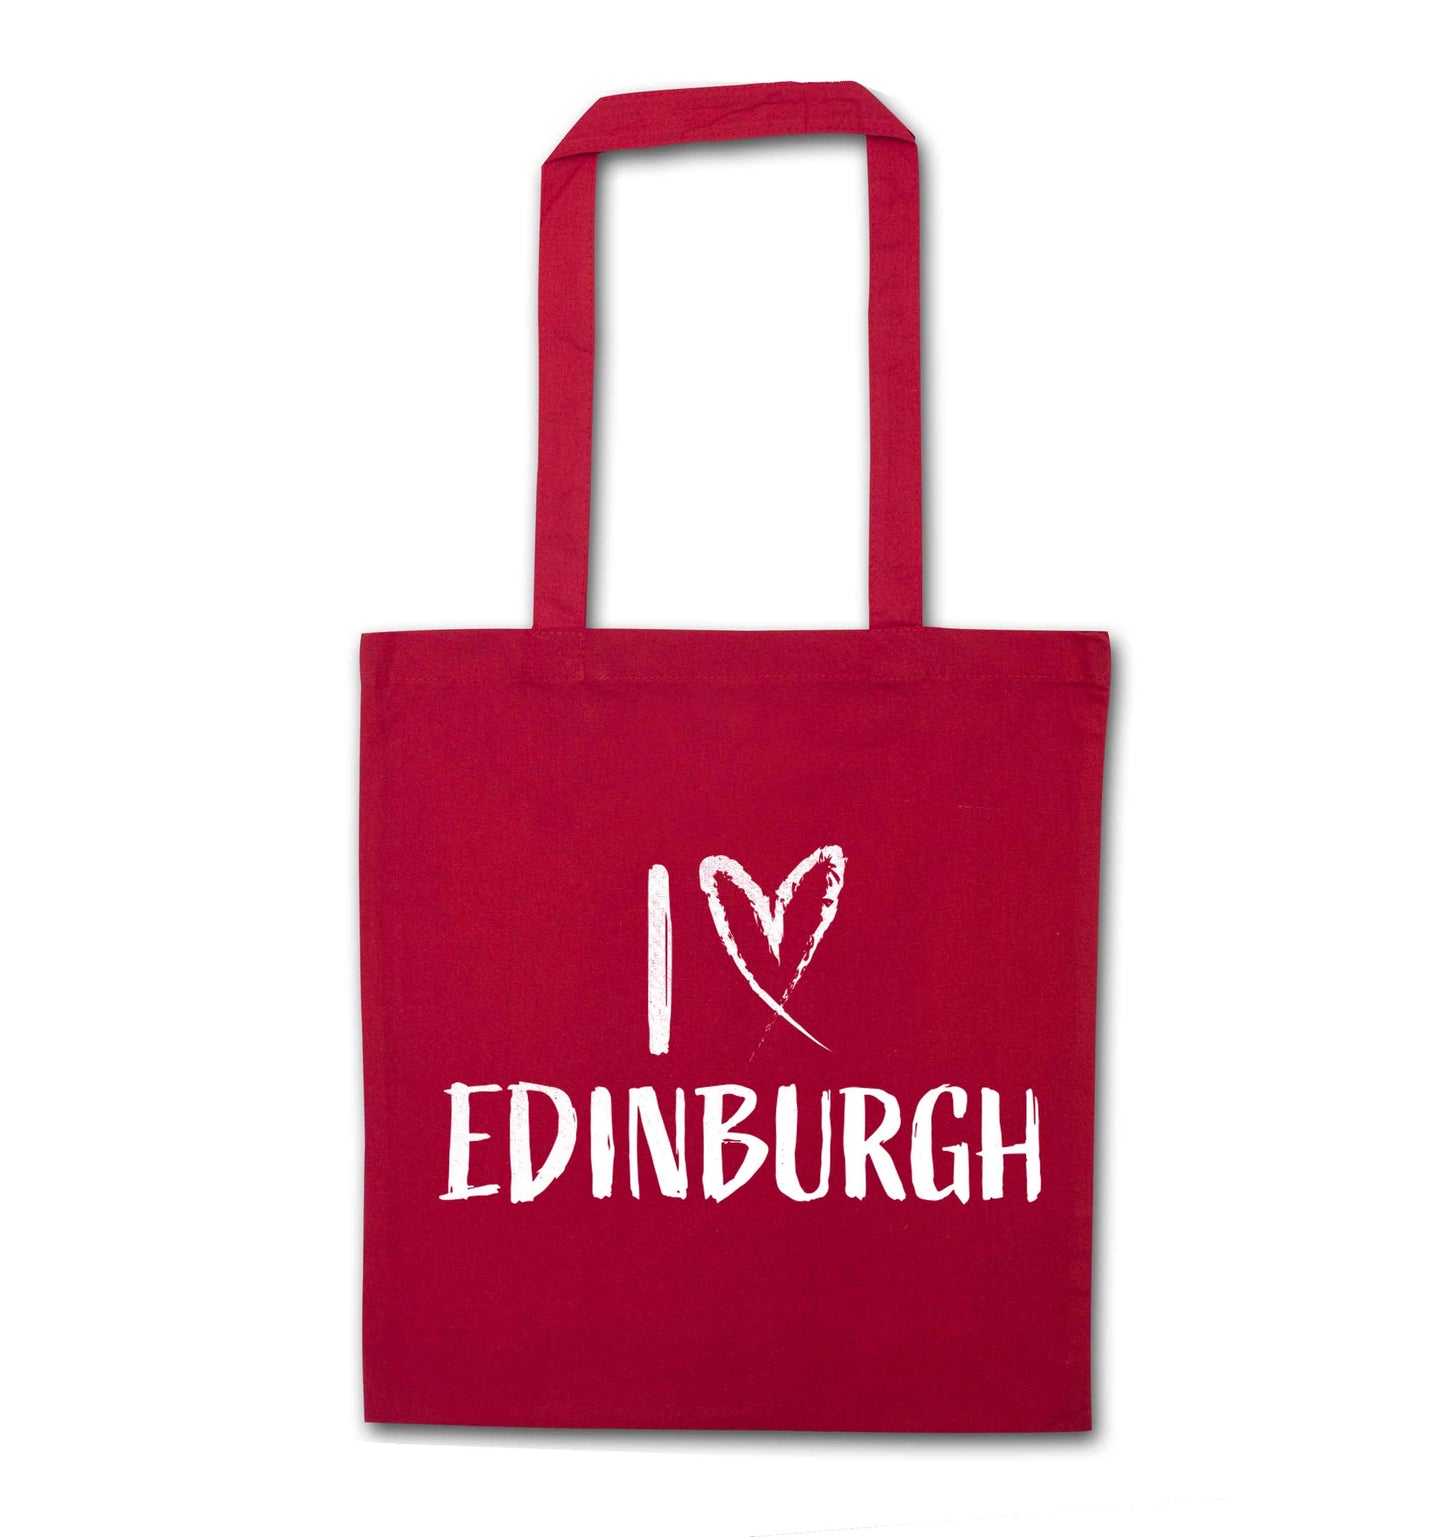 I love Edinburgh red tote bag